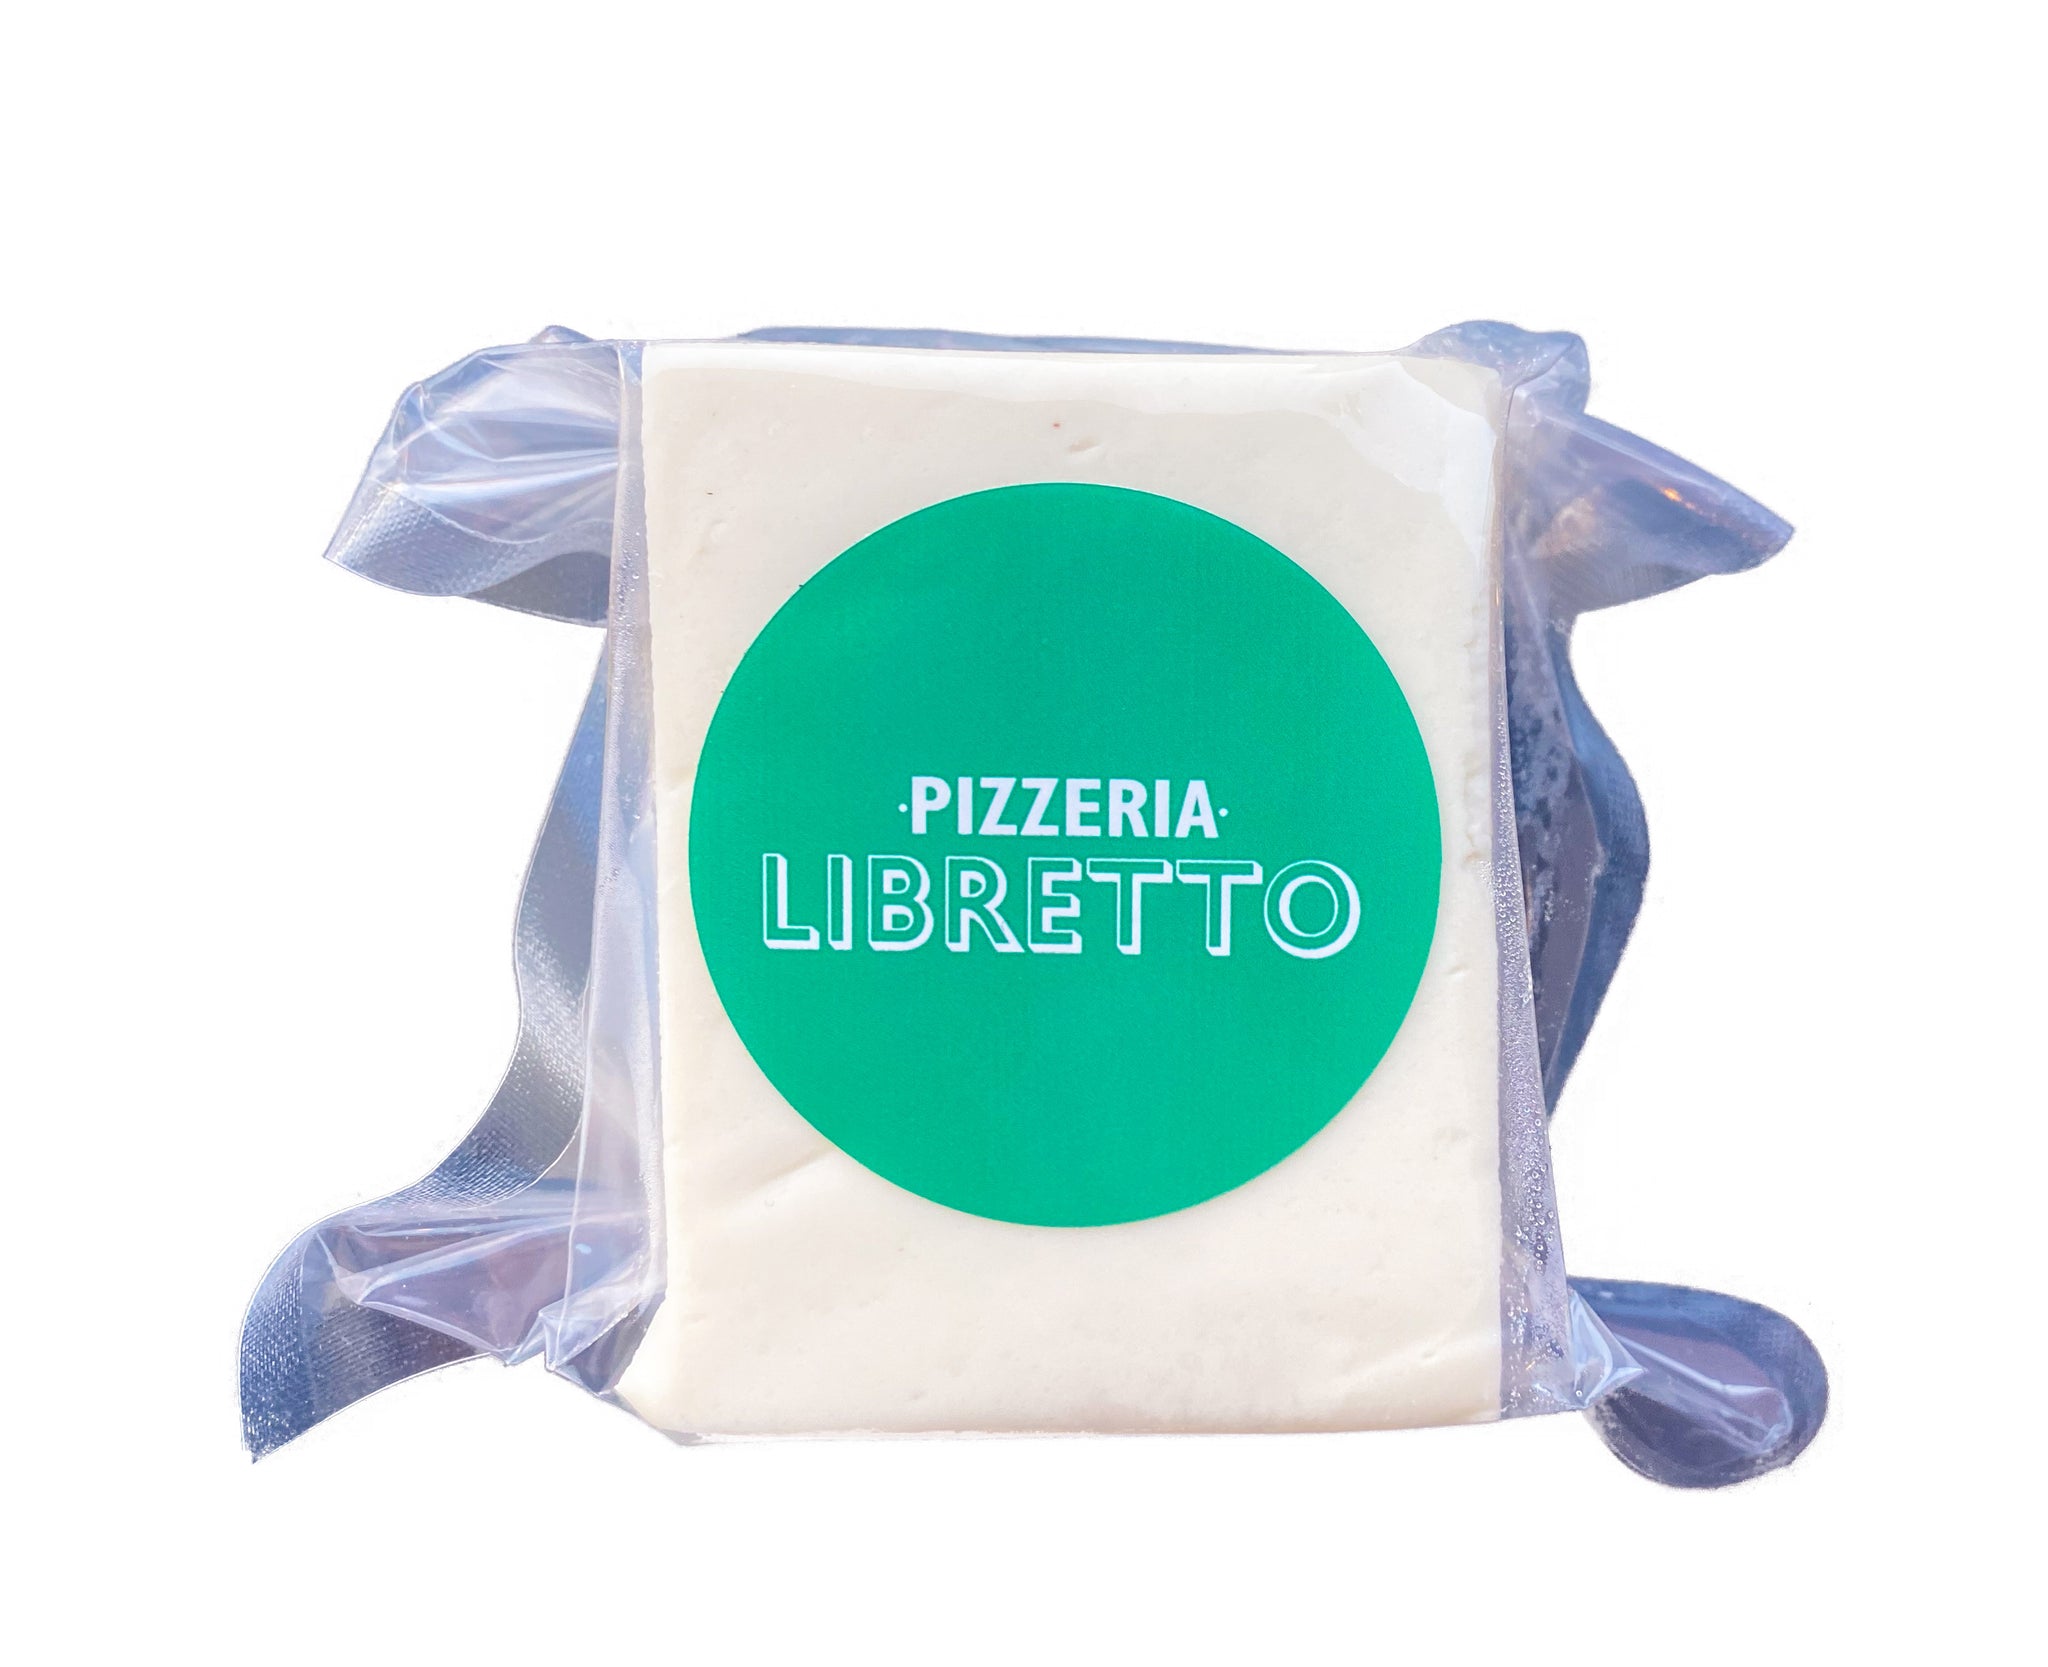 Vegan mozarella cheese in its packaging